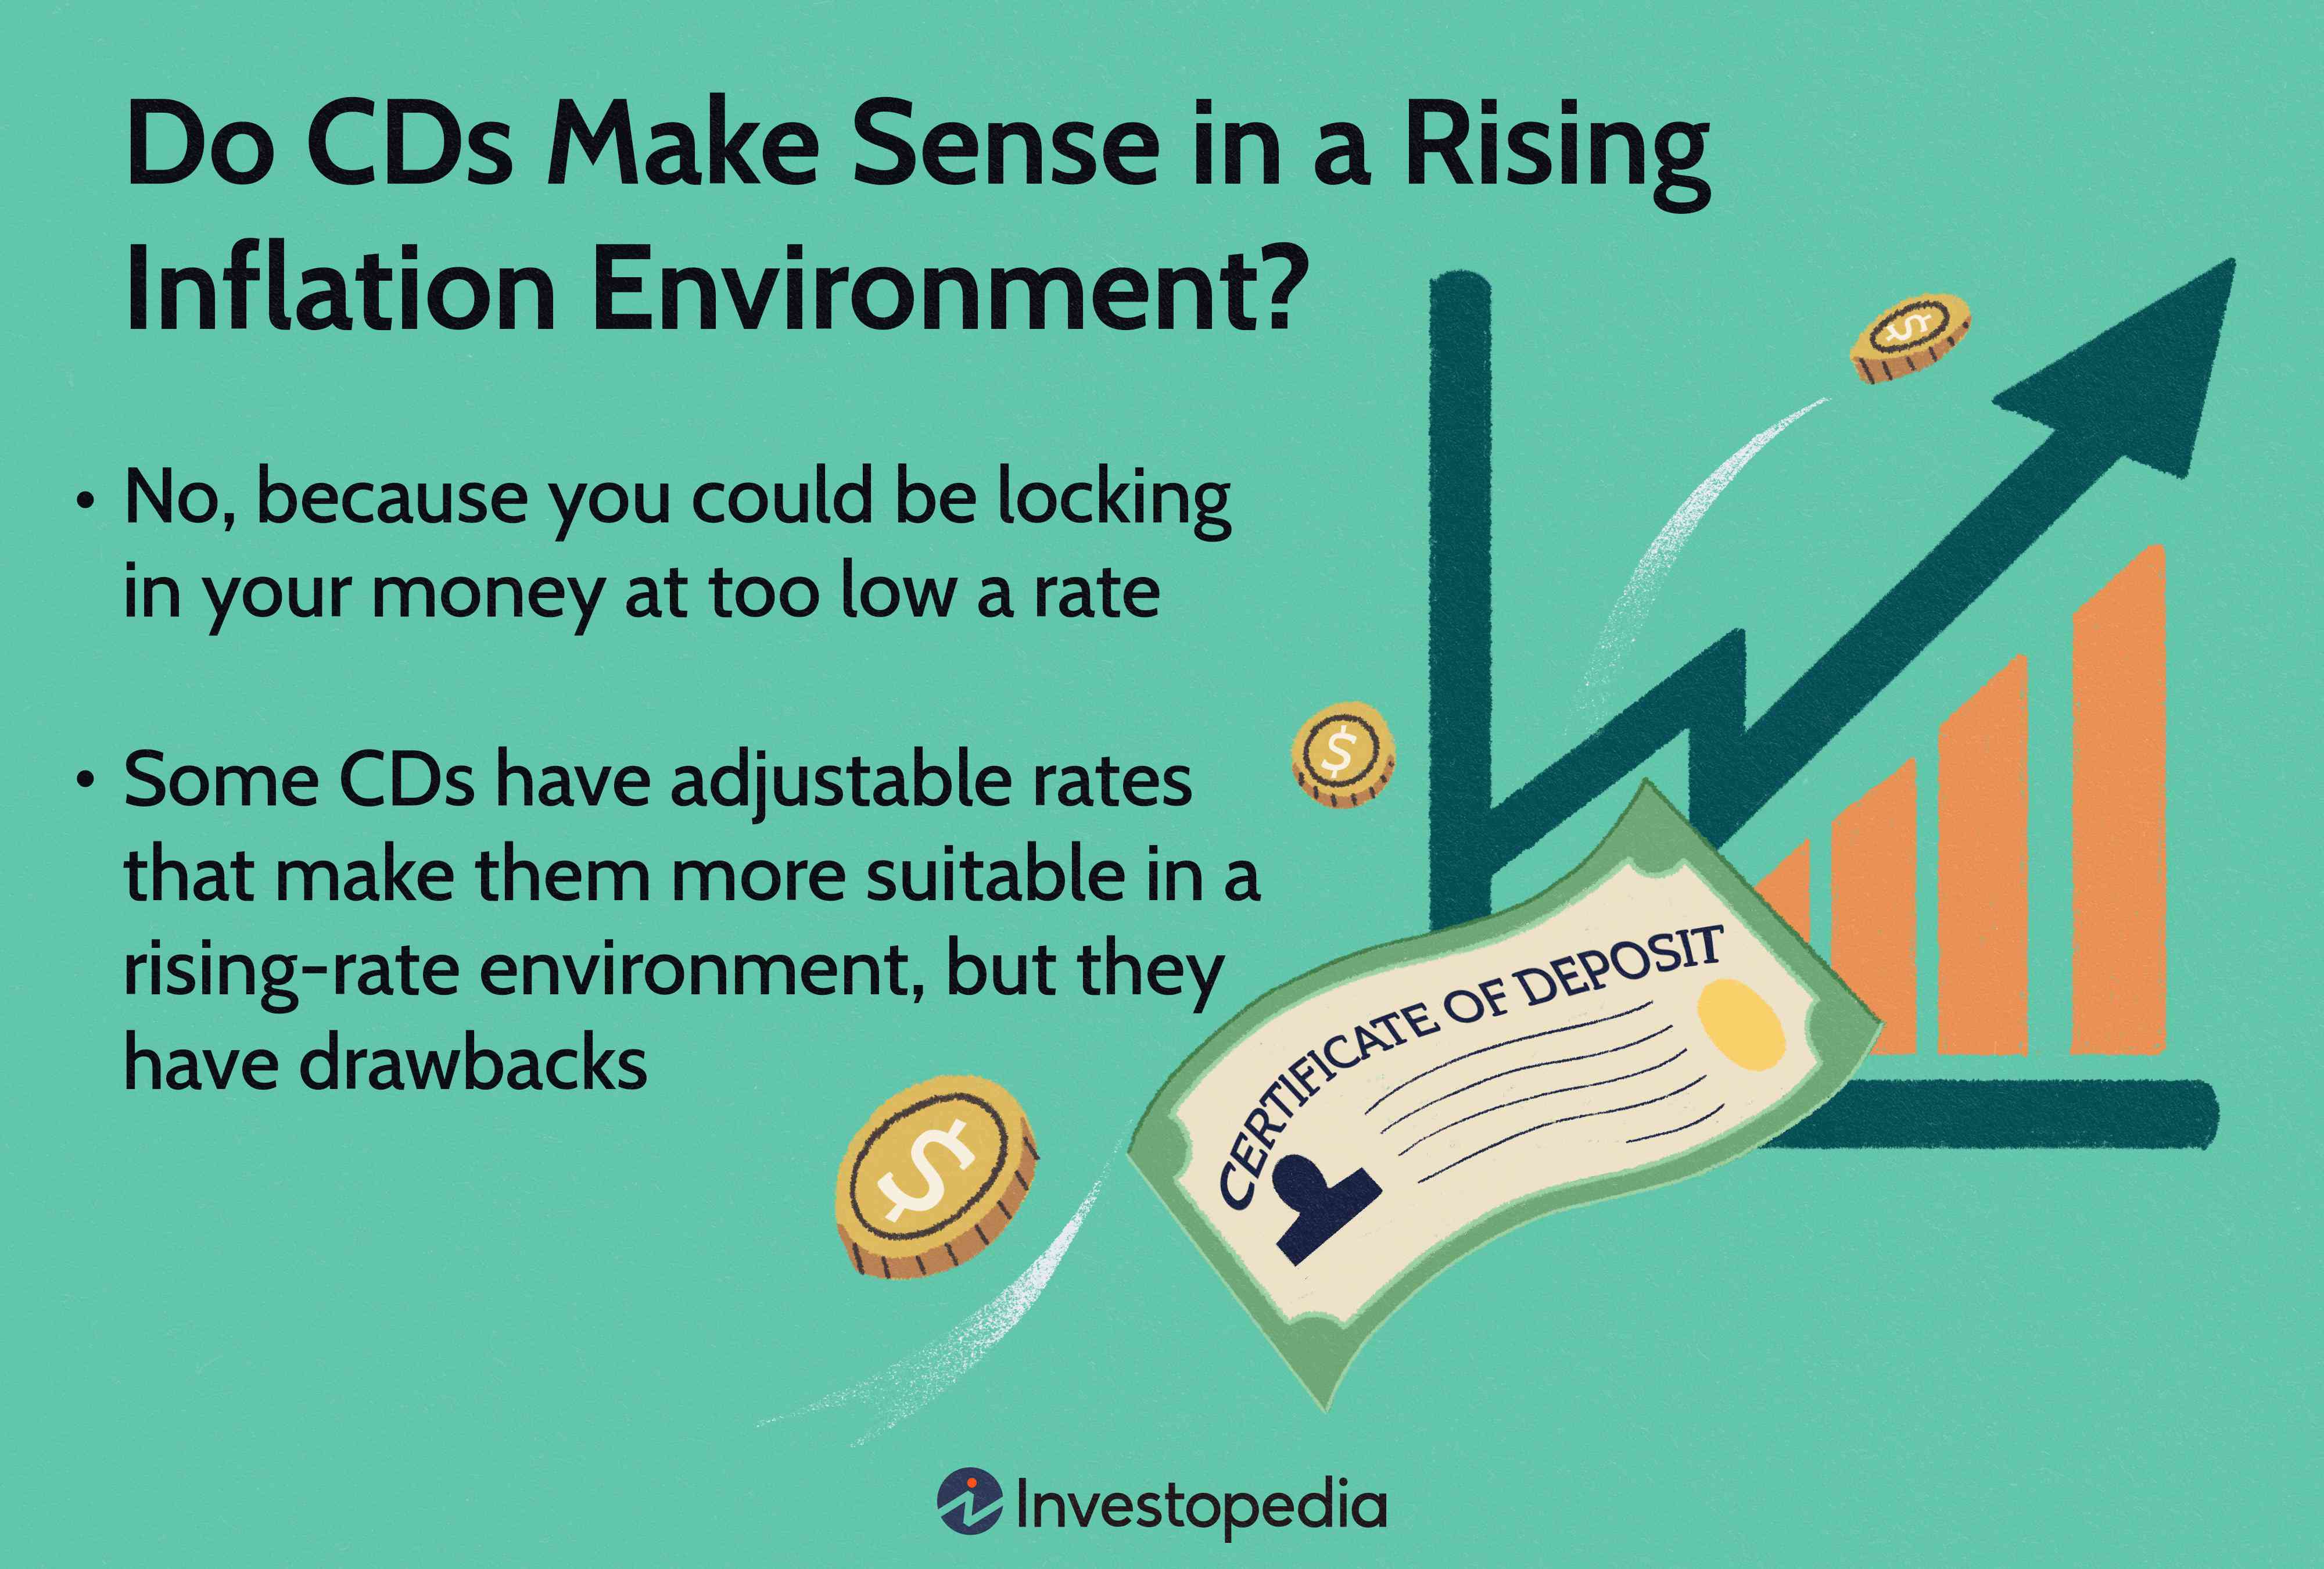 Do CDs Make Sense in a Rising Inflation Environment?